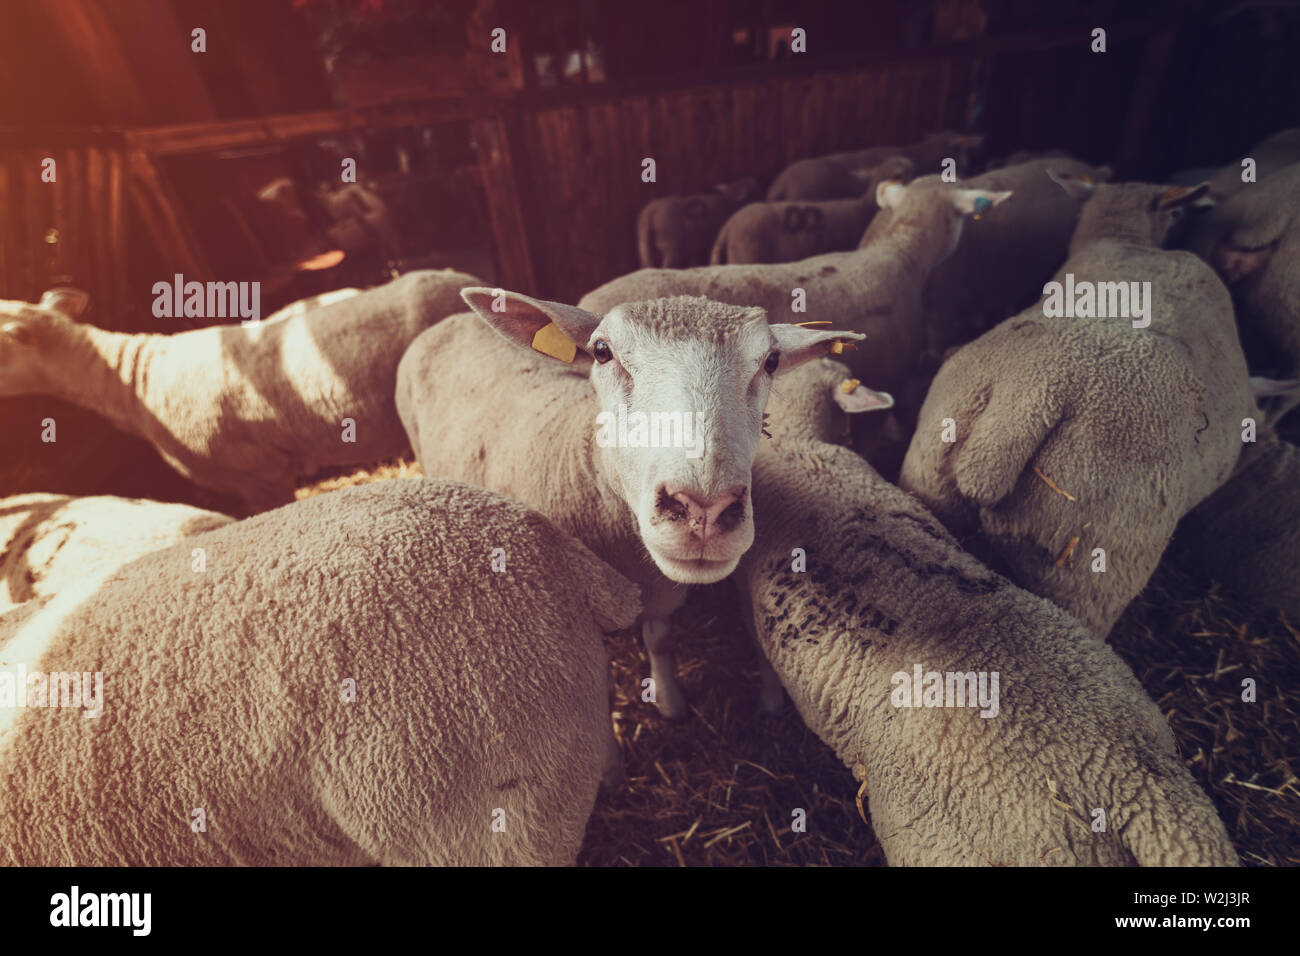 Ile de France sheep flock in pen on livestock farm, domestic animals husbandry concept Stock Photo